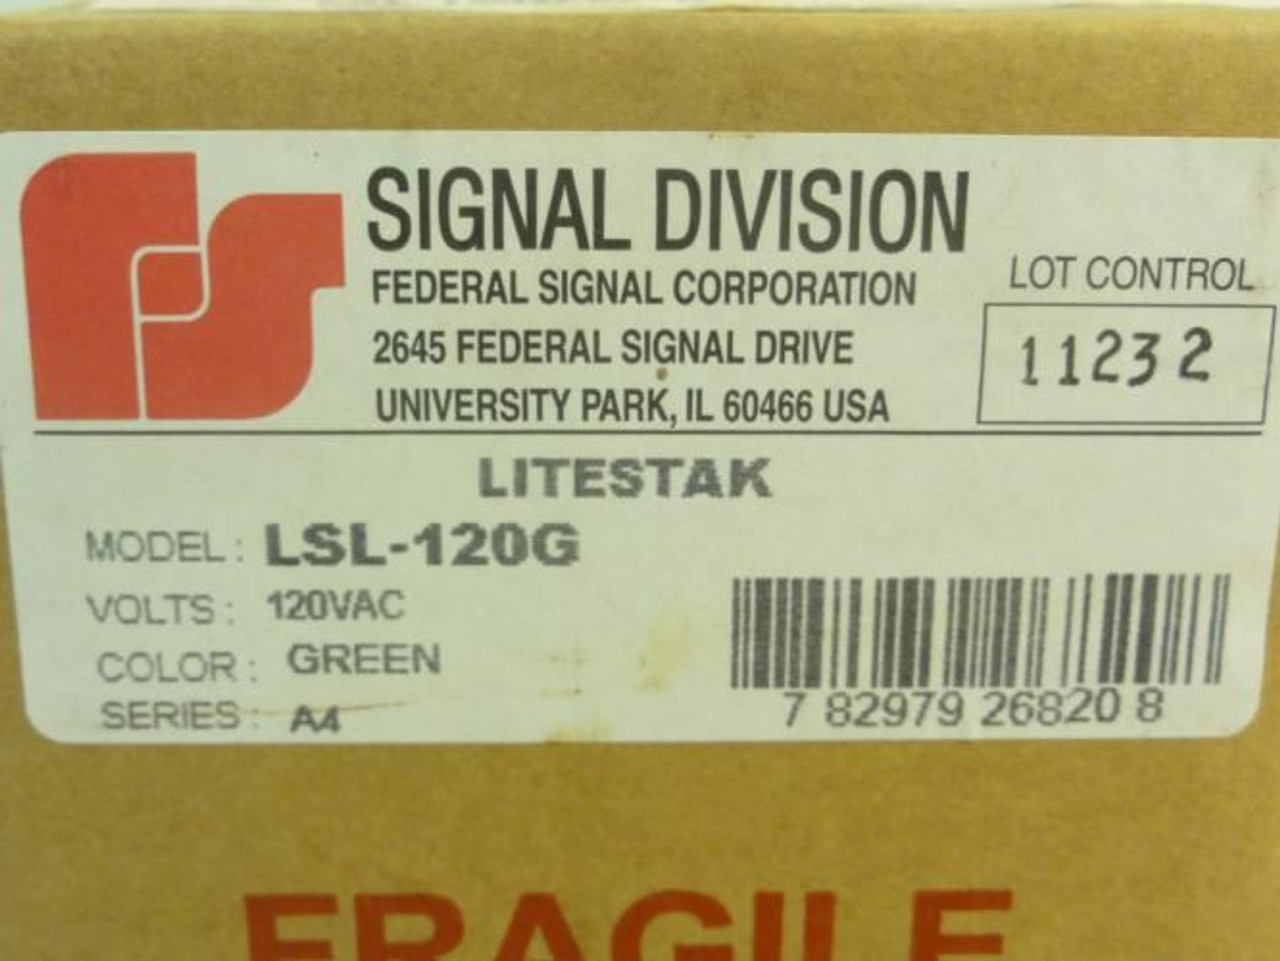 Federal Signal LSL-120G; Litestak; Green; Series A4; 120VAC